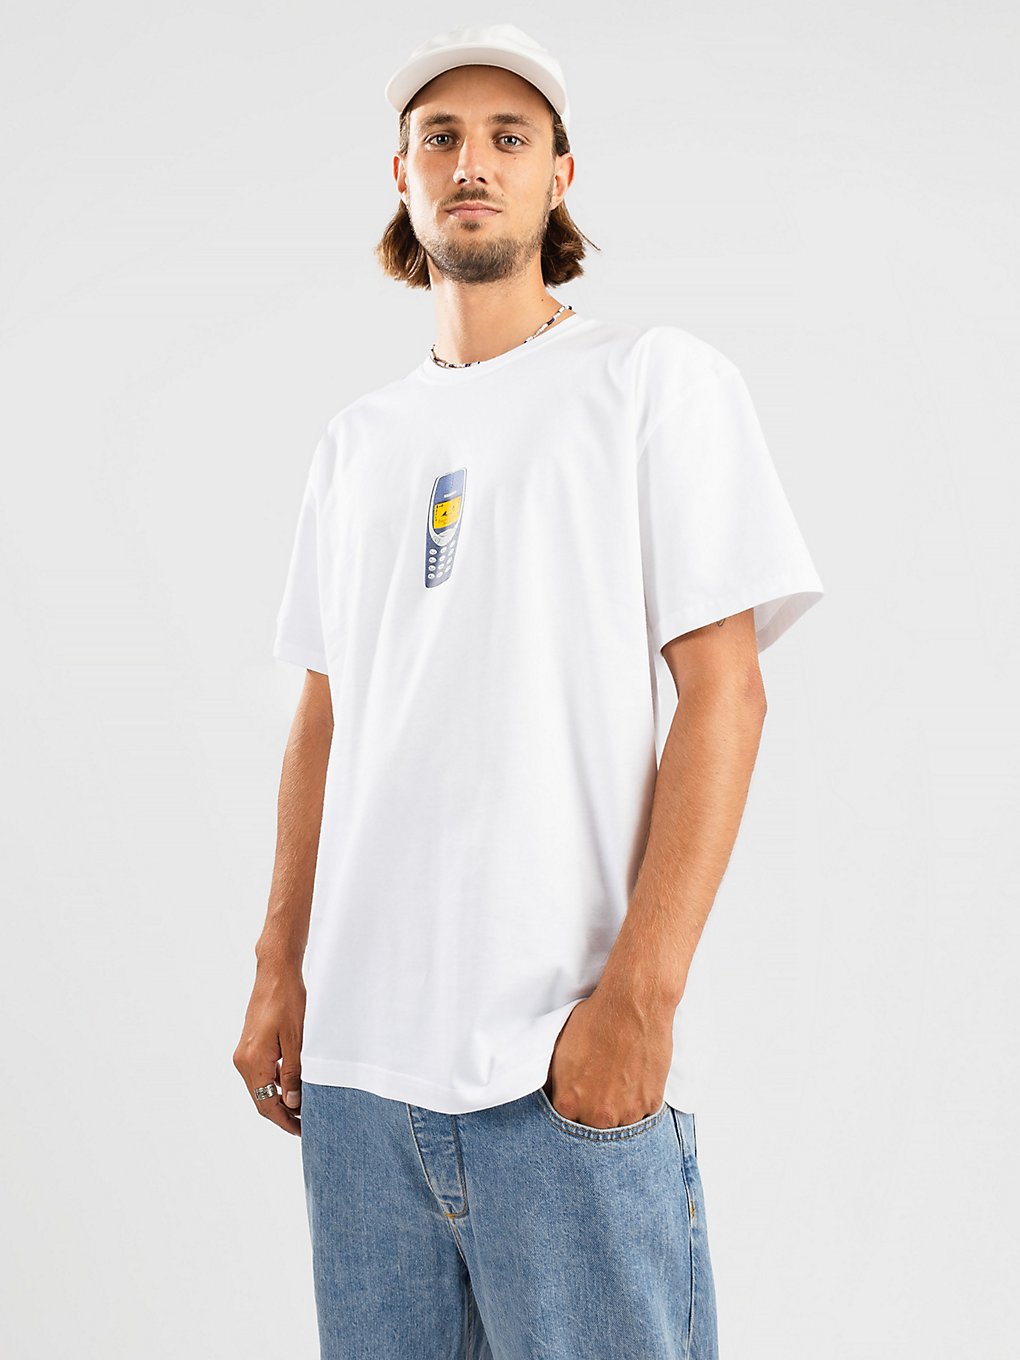 Cleptomanicx Disconnect T-Shirt white kaufen